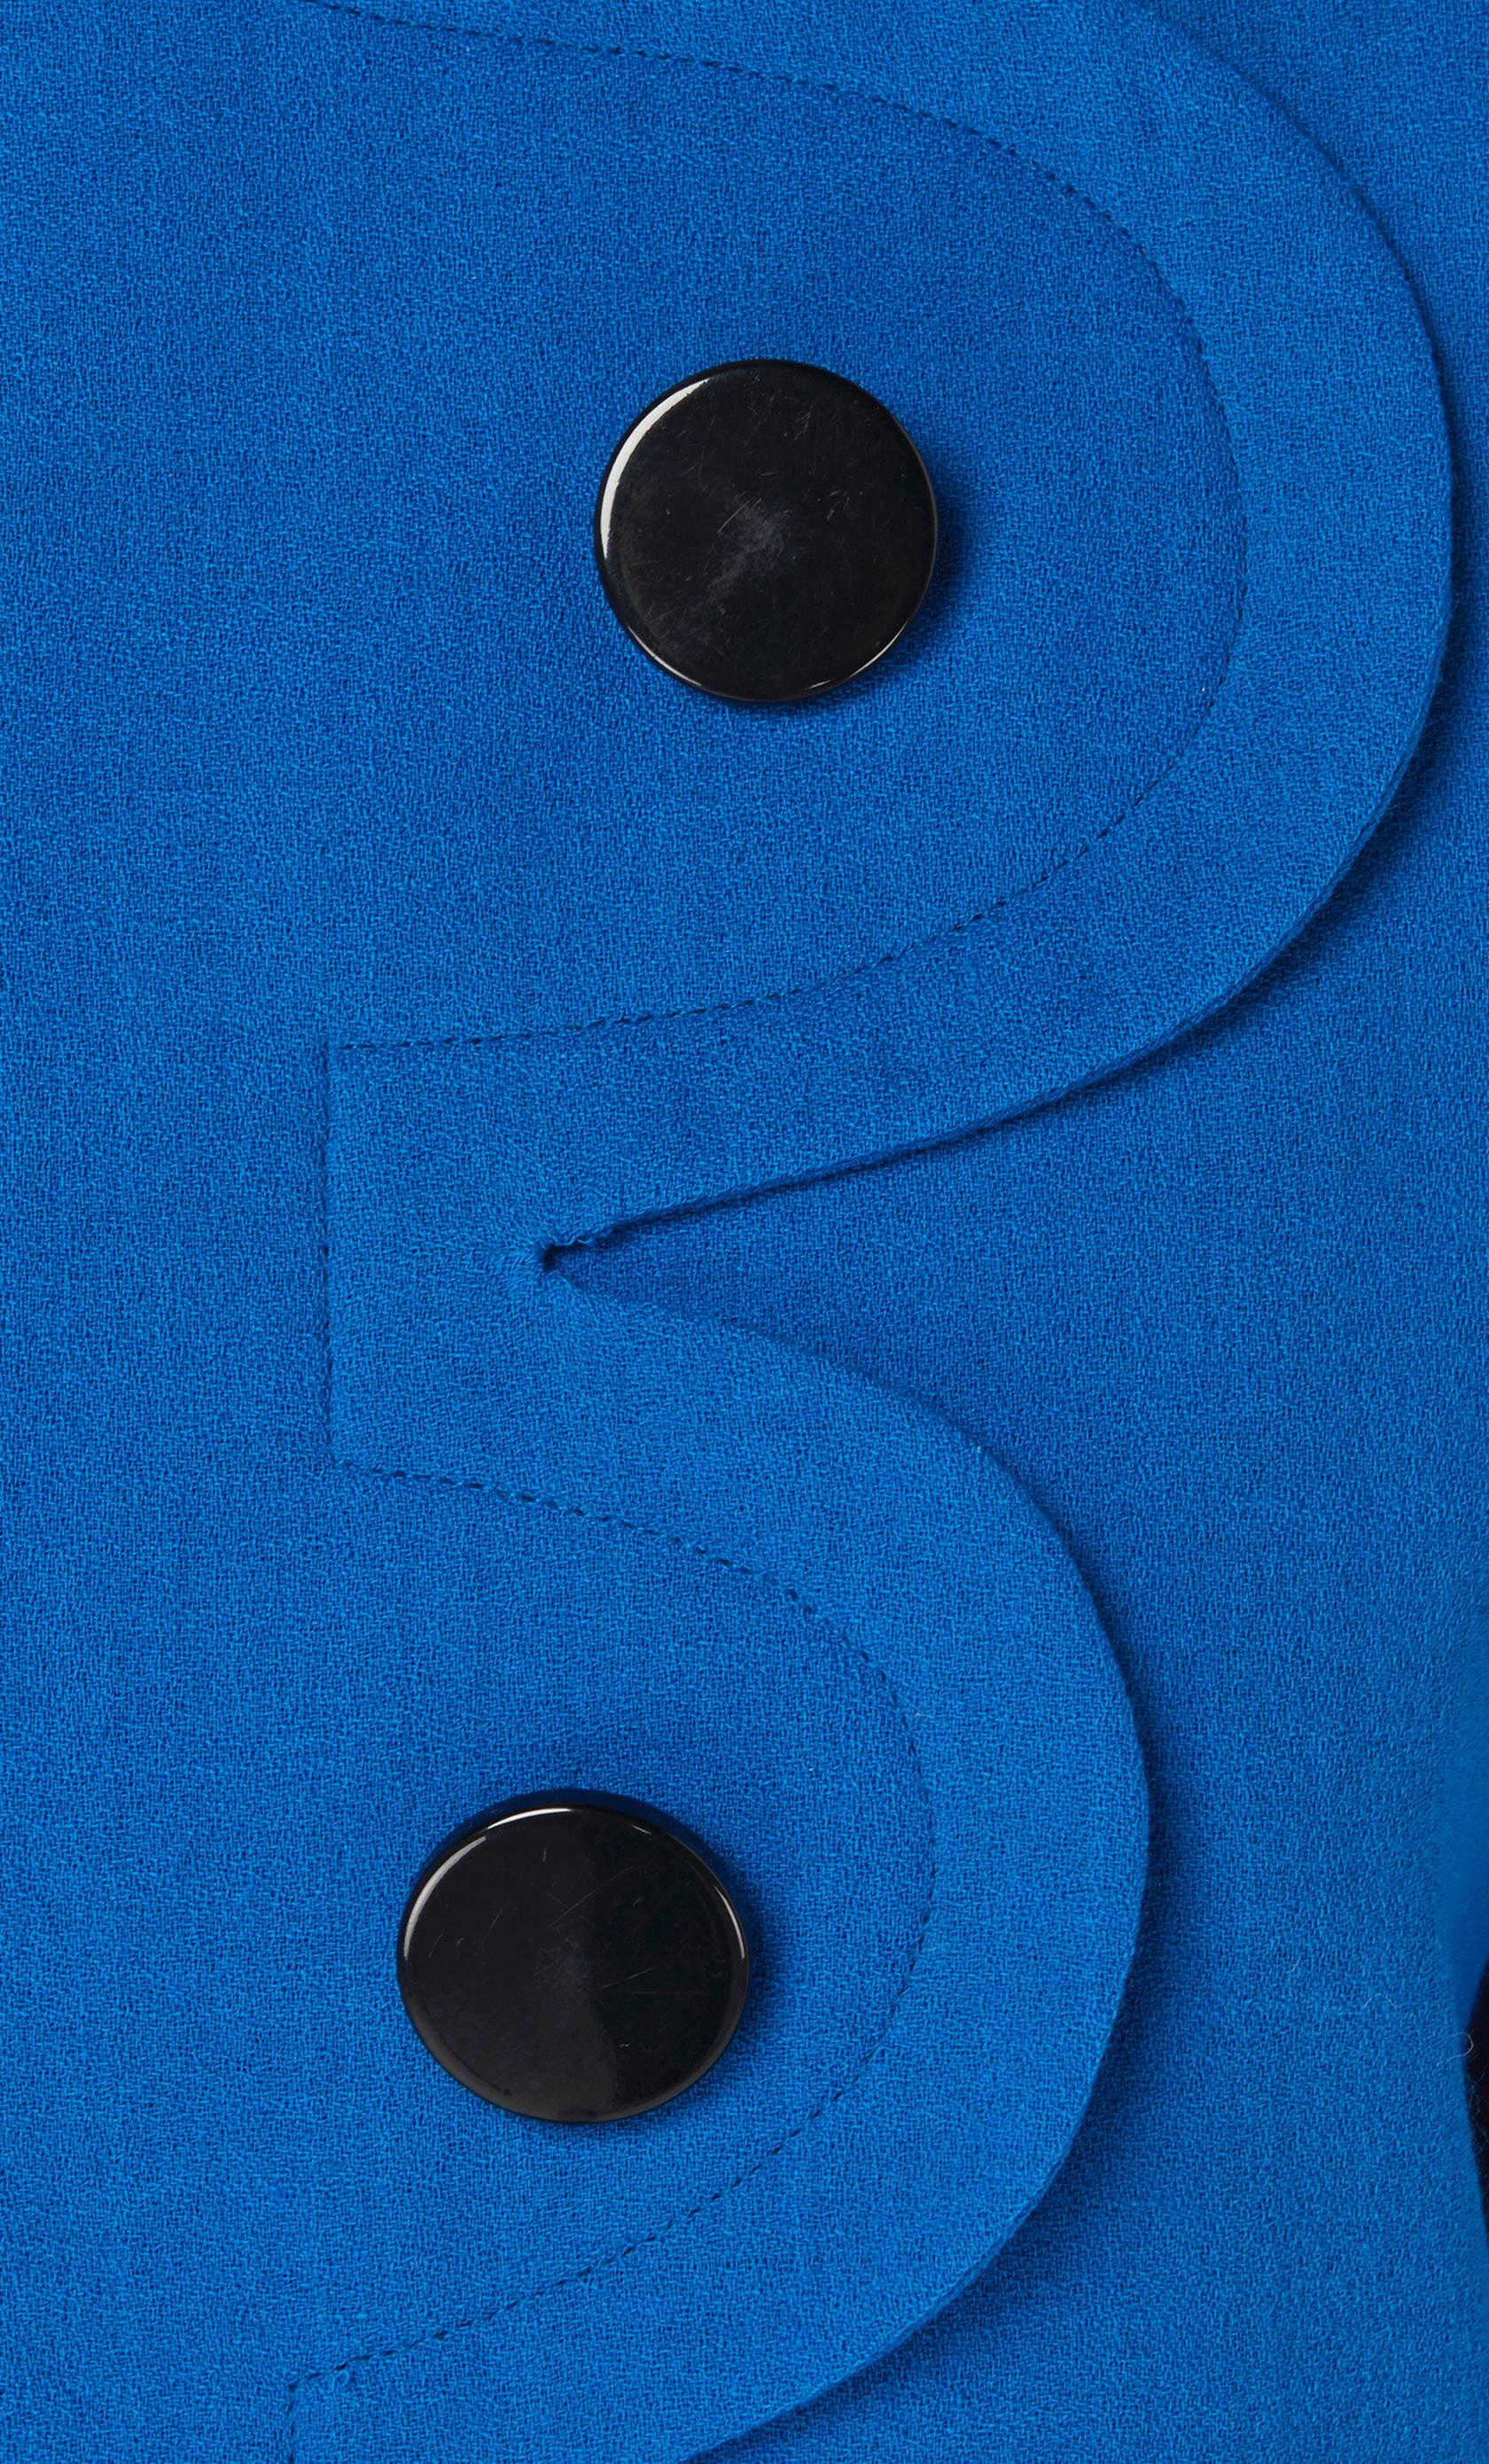 Blue Pierre Cardin blue tunic, circa 1980